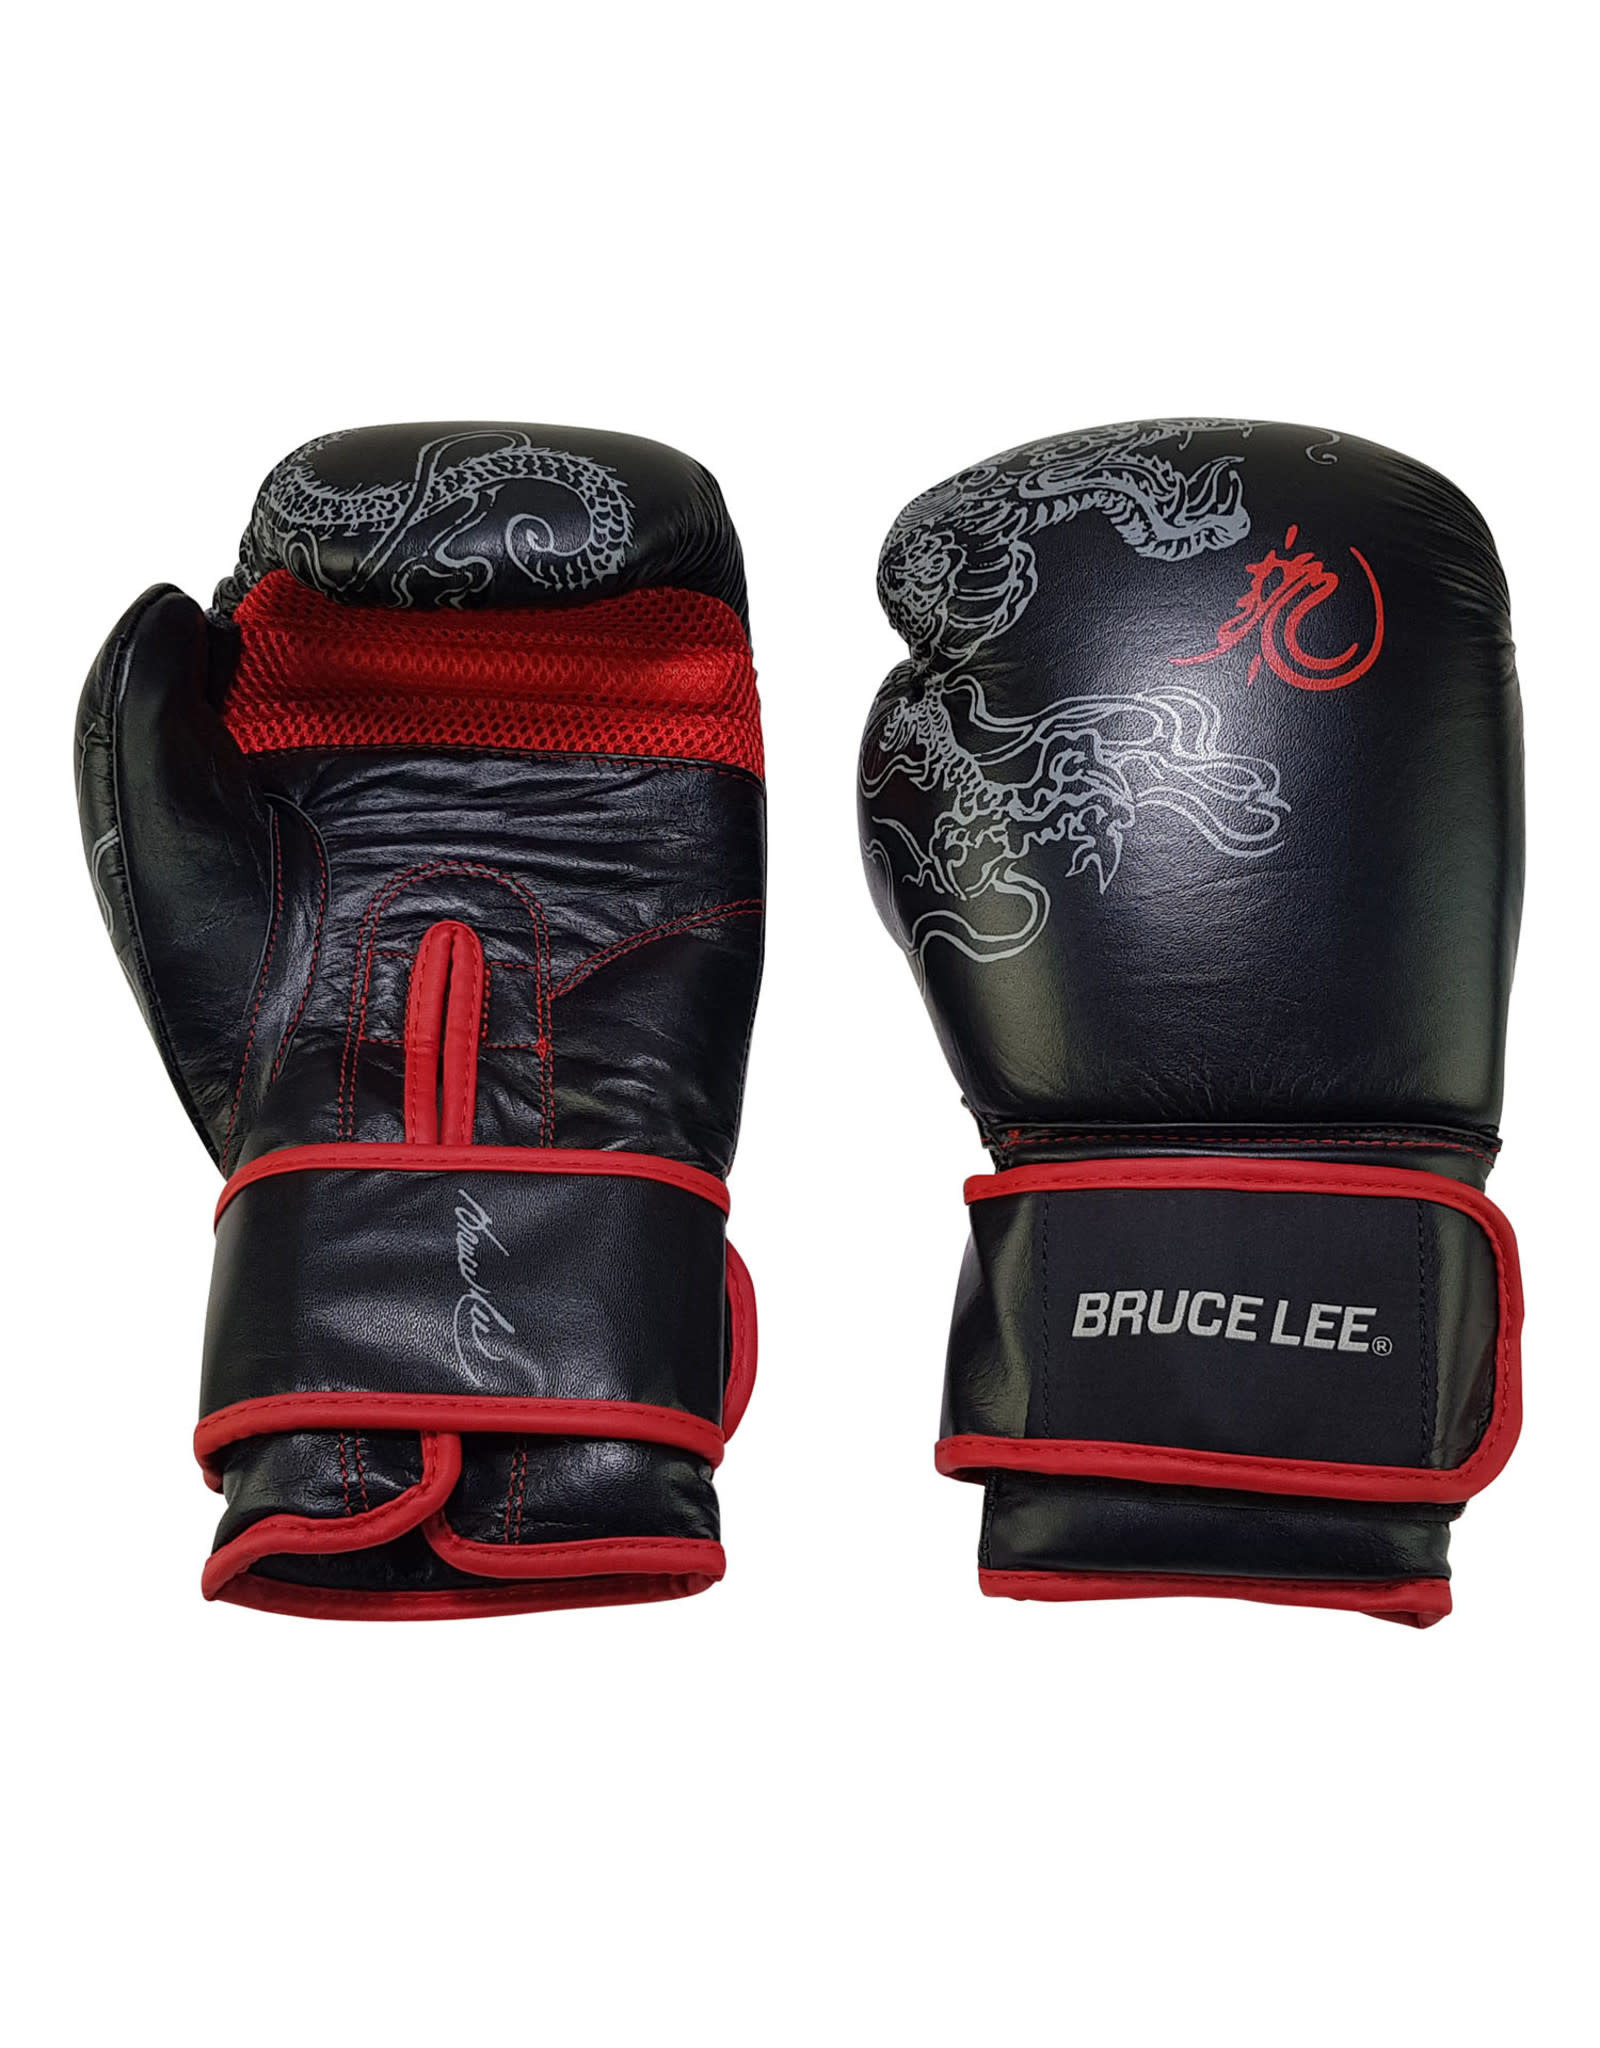 Bruce Lee Dragon Boxing Gloves